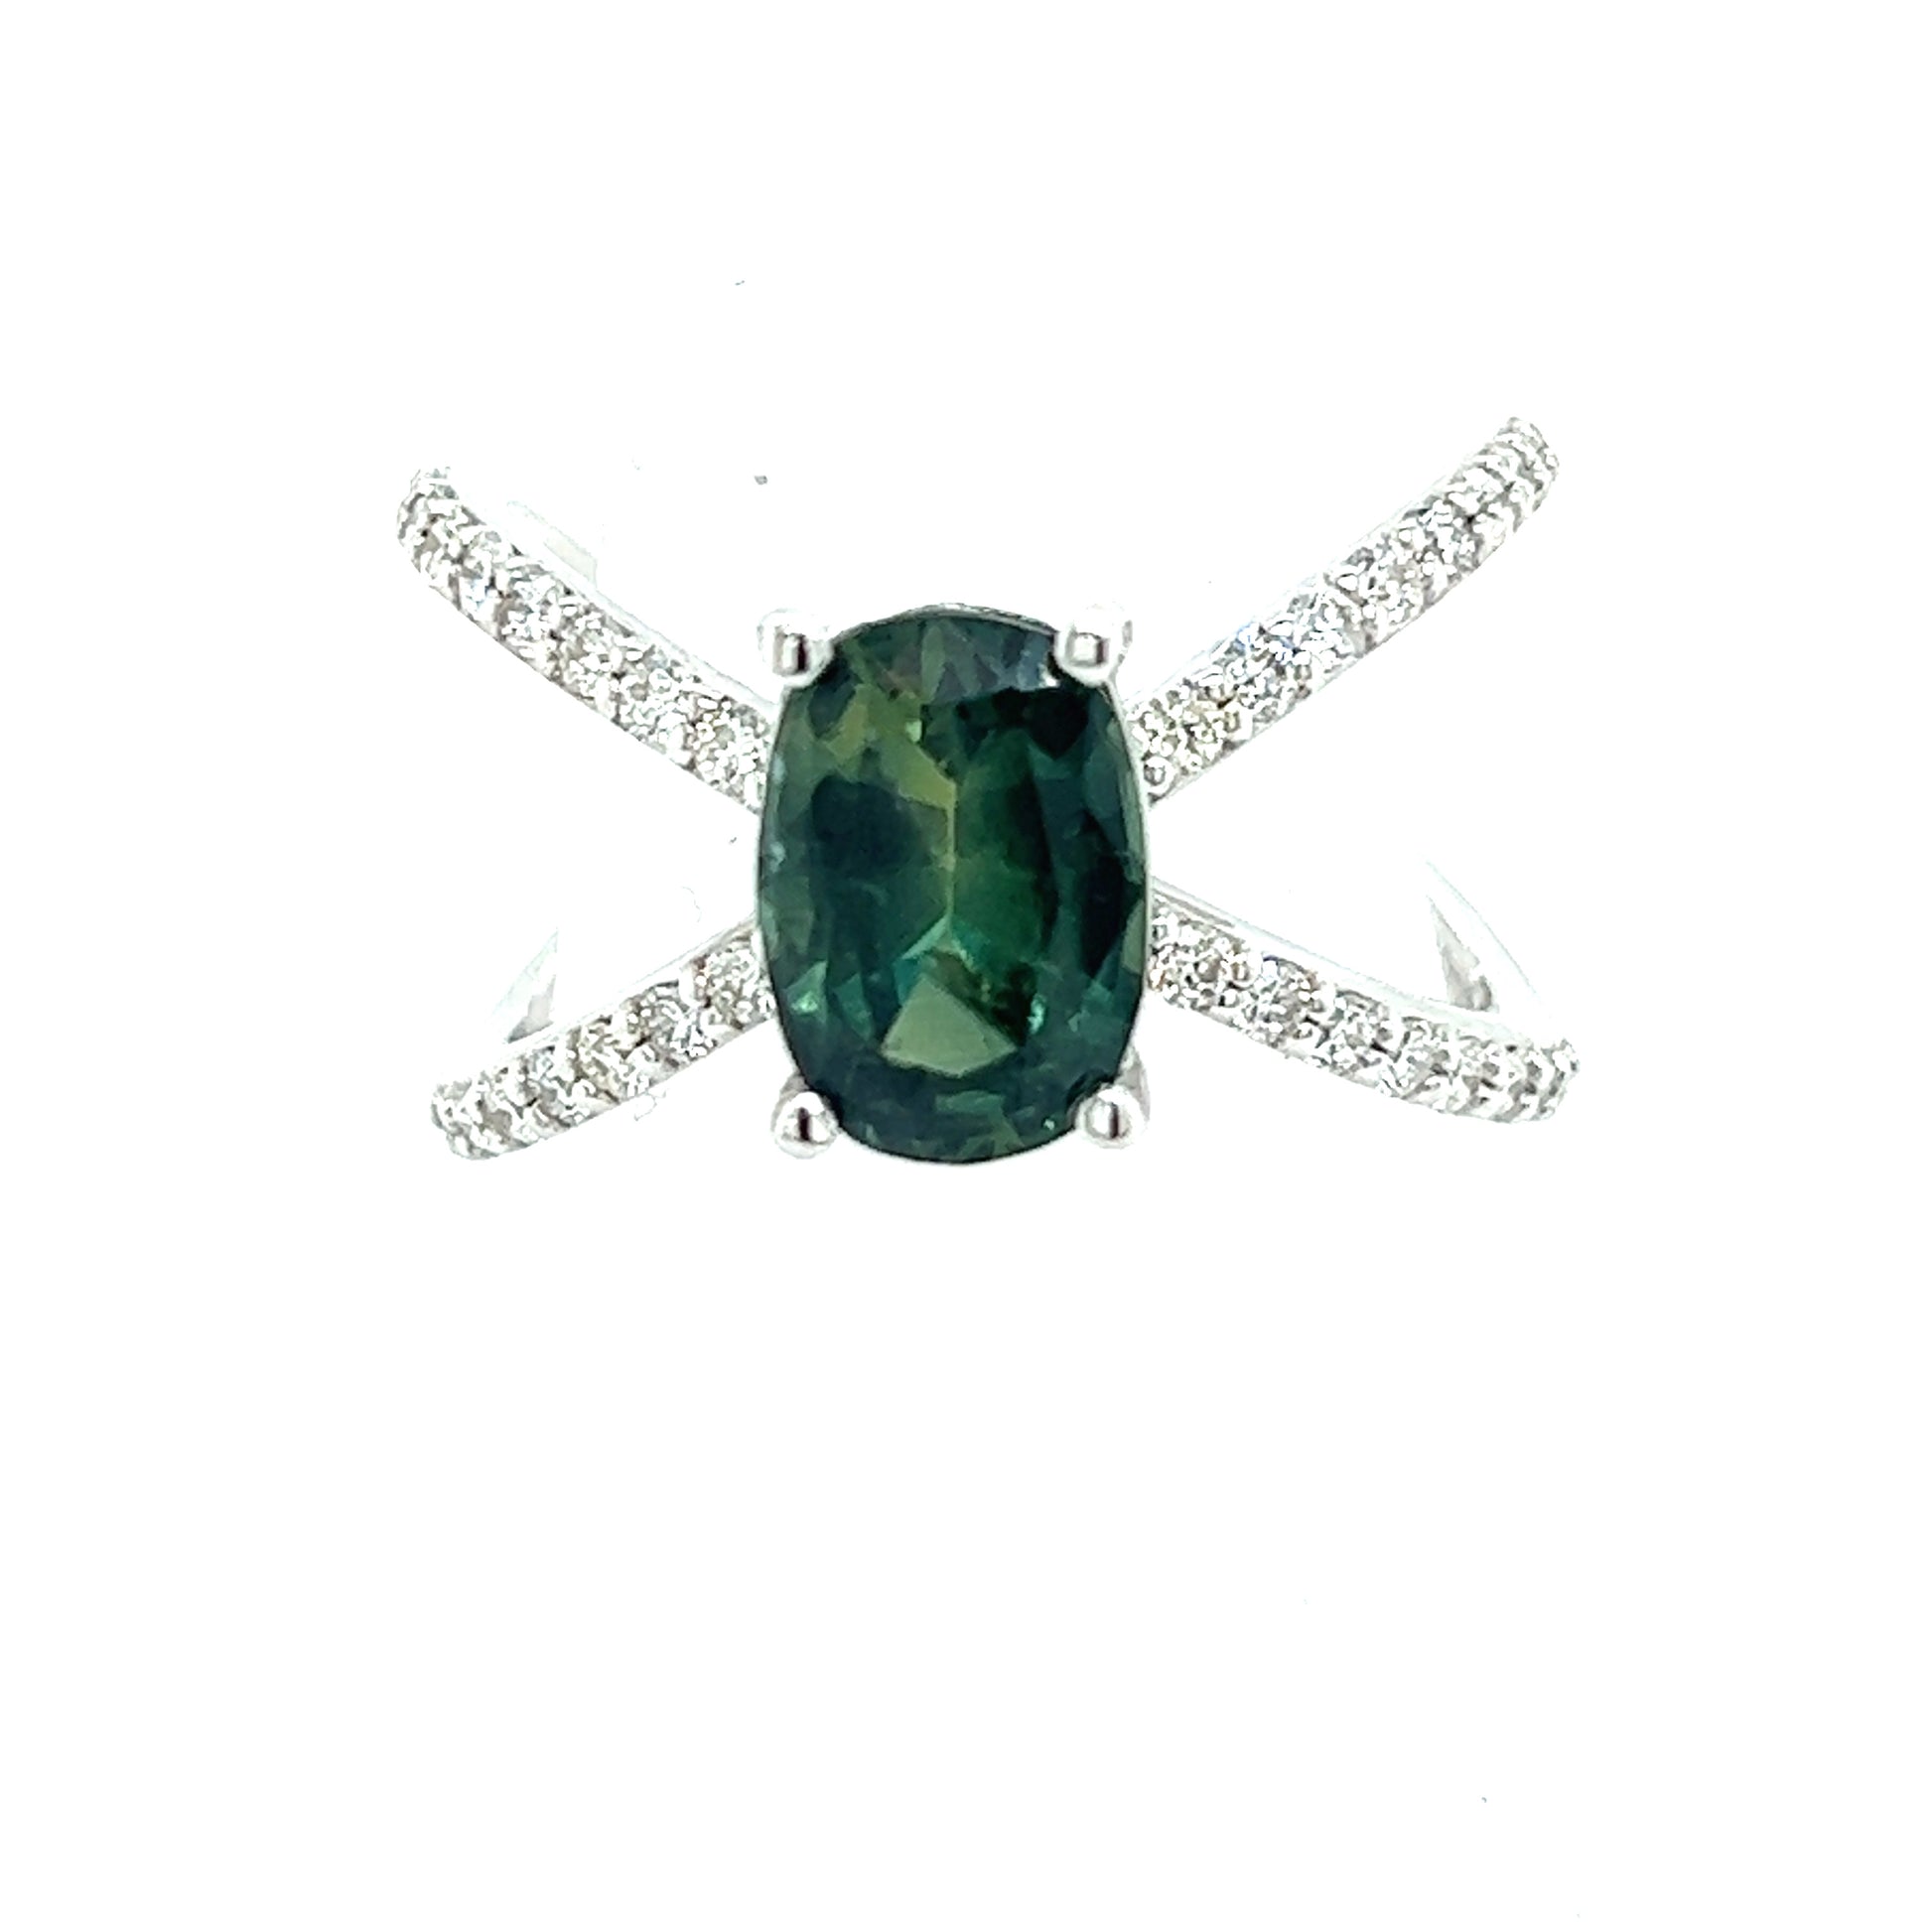 Natural Tourmaline Diamond Ring Size 6.5 14k W Gold 1.78 TCW Certificate $4,950 217109